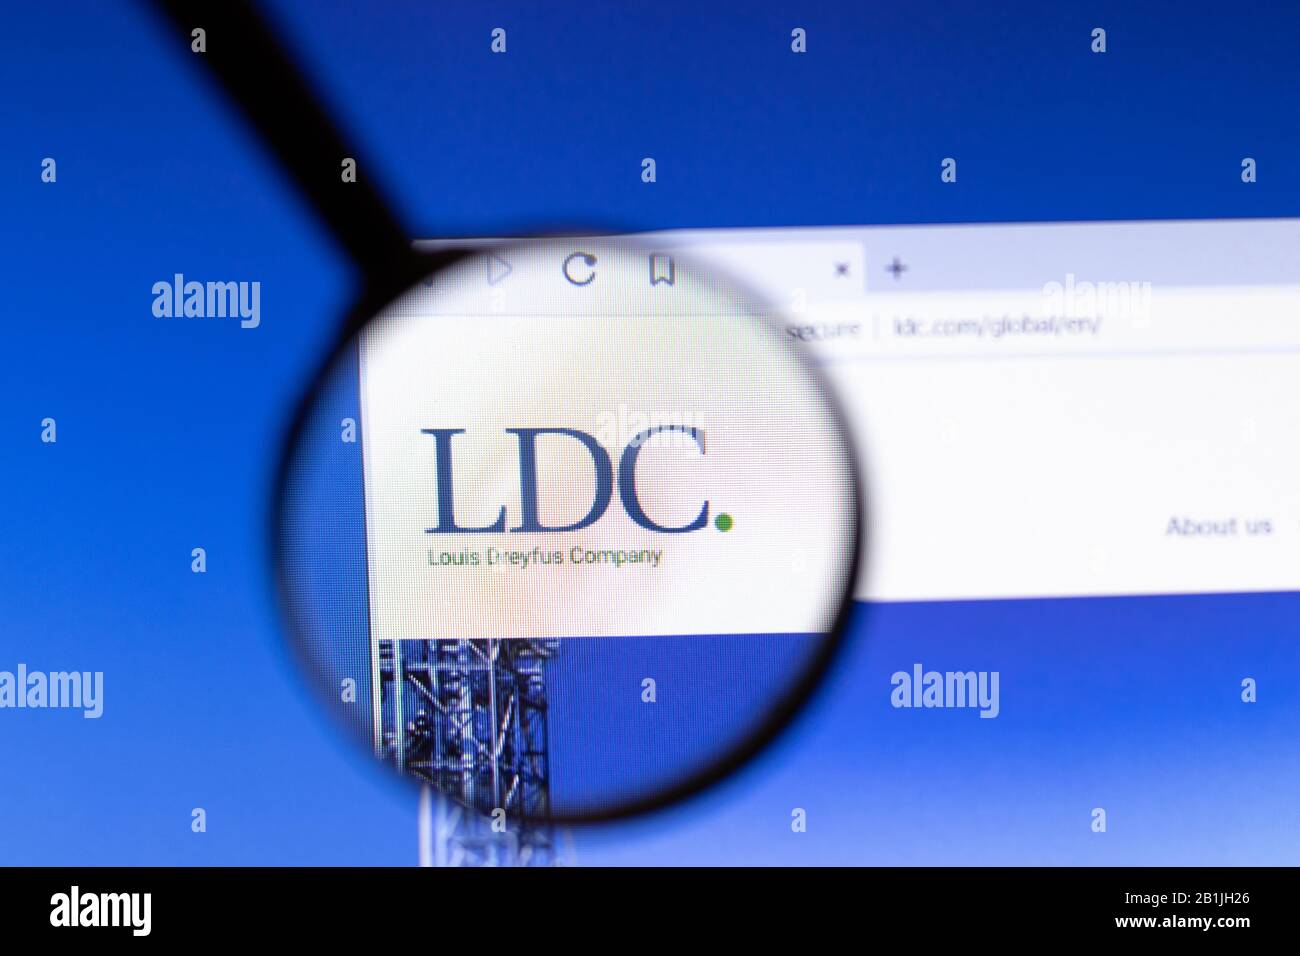 Los Angeles, California, USA - 25 February 2020: Louis Dreyfus Company website homepage icon. LDC.com logo visible on display screen, Illustrative Stock Photo